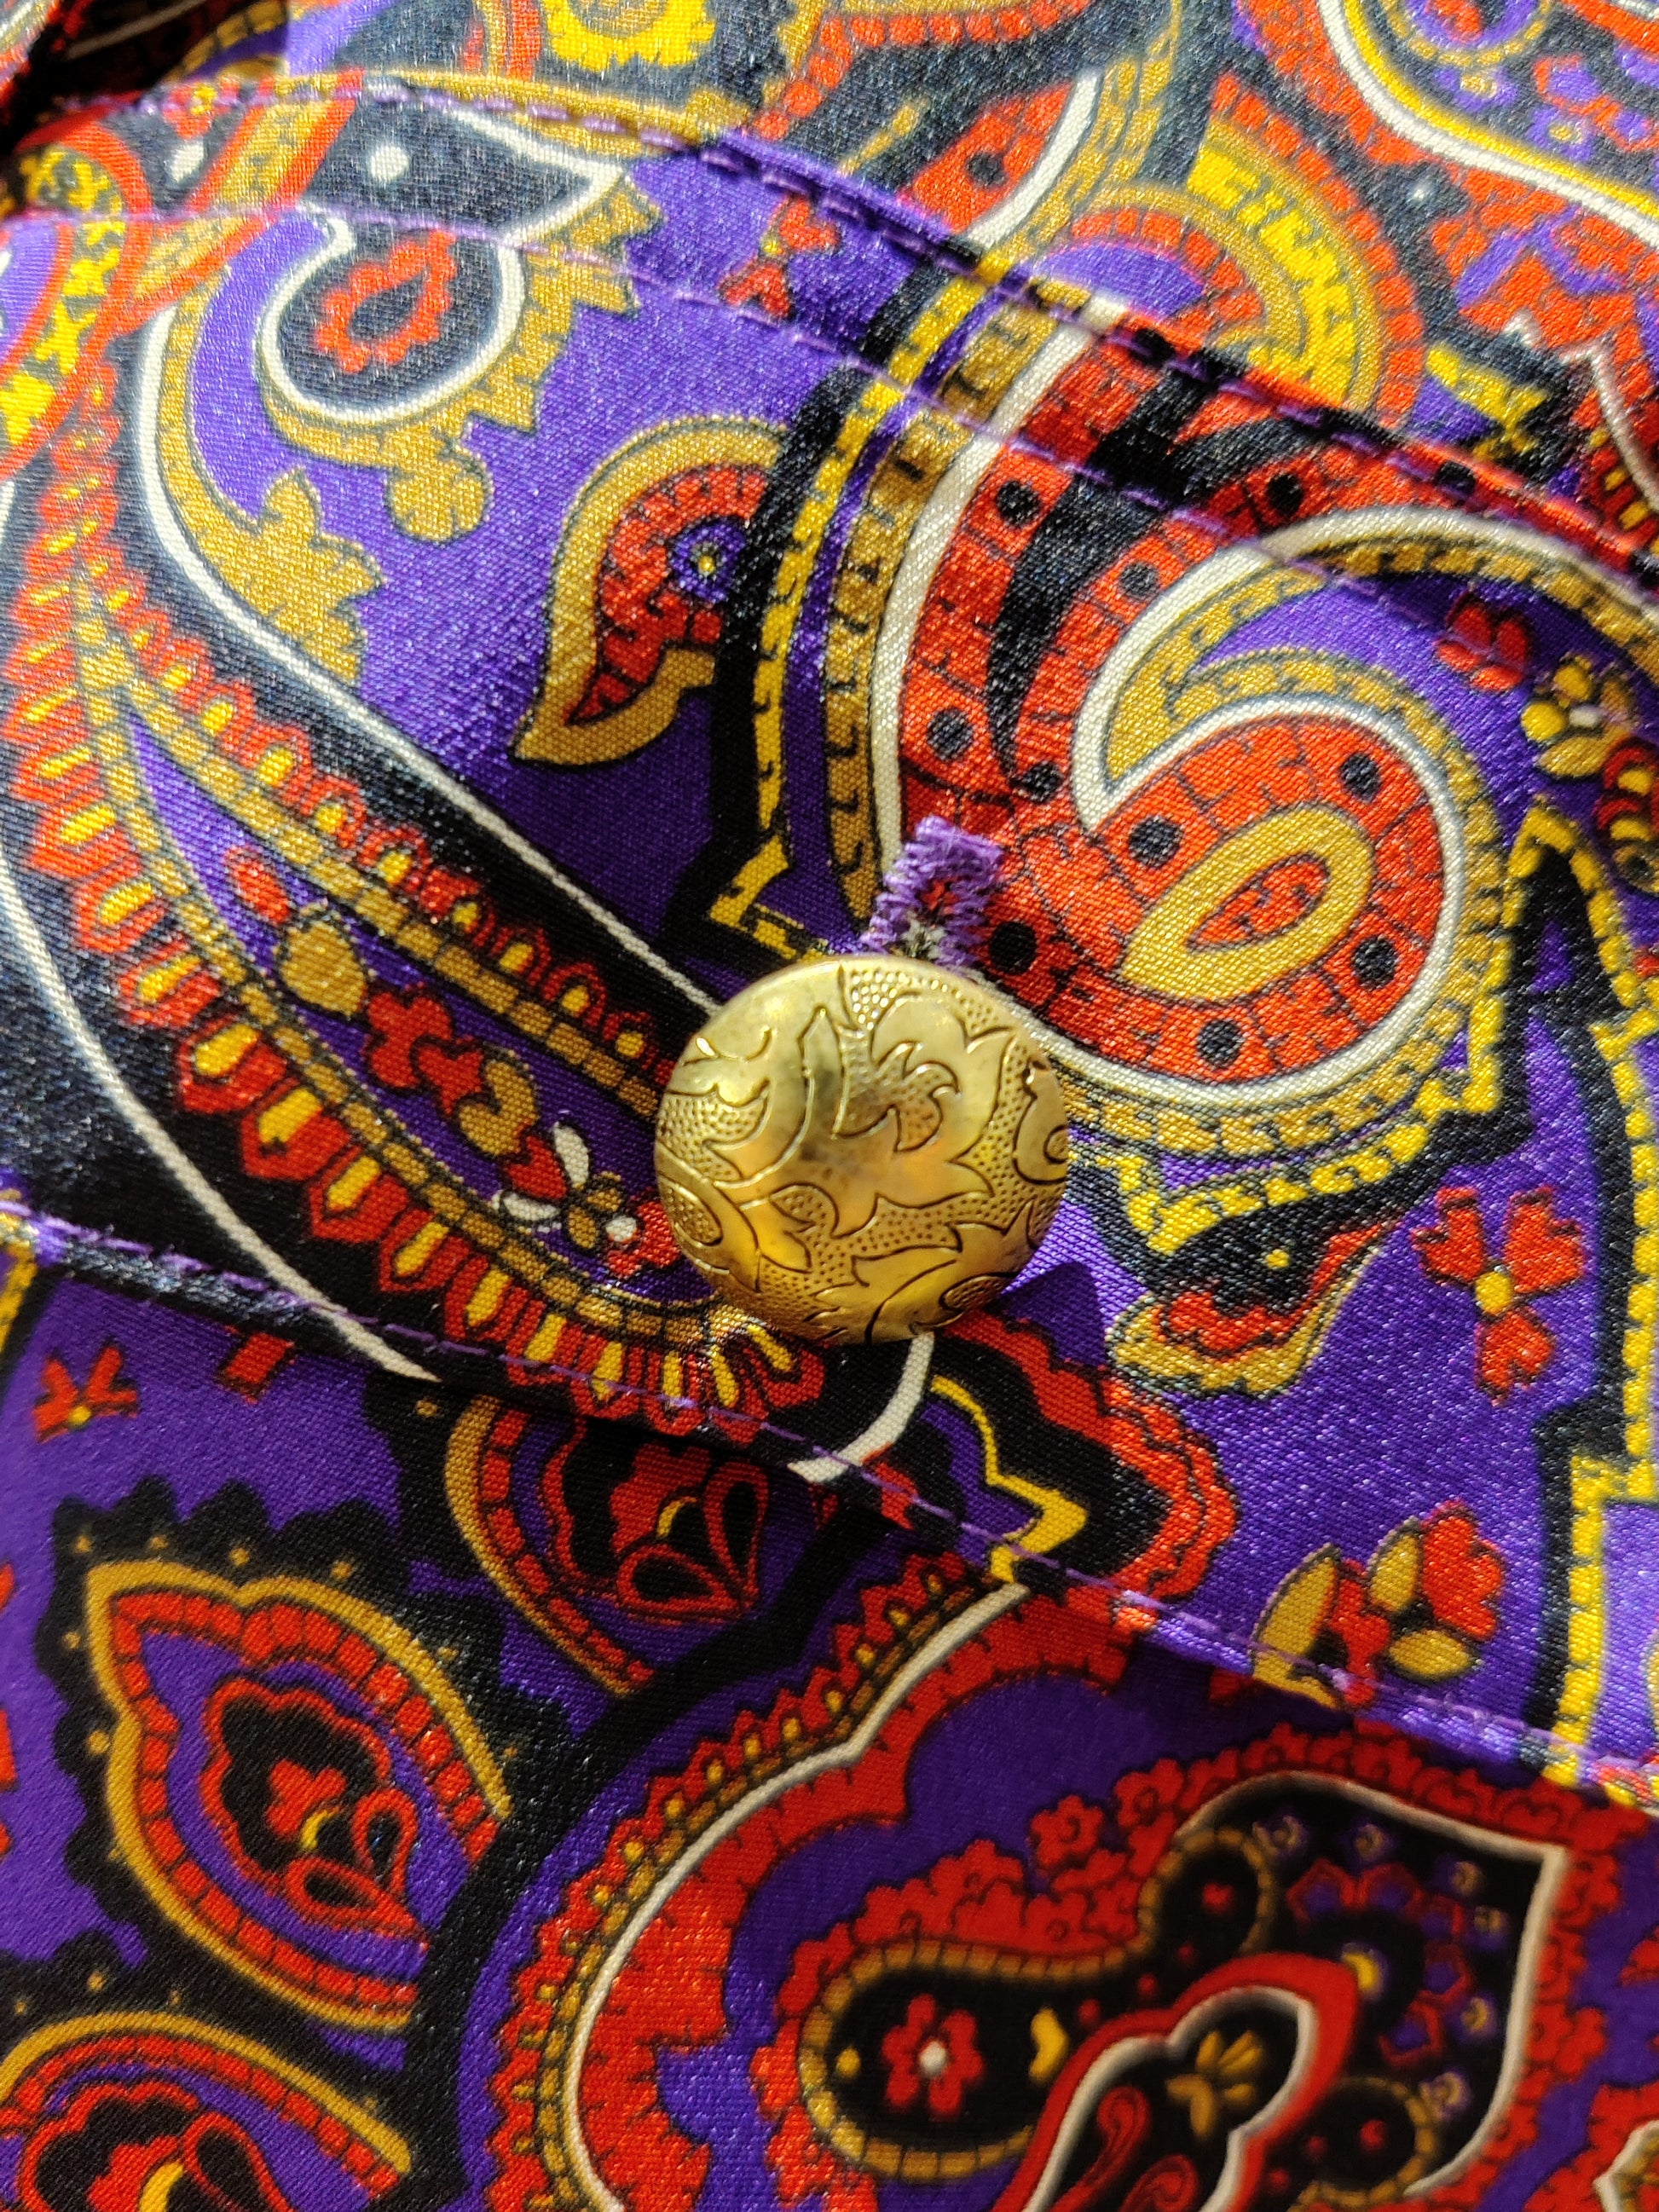 Stunning gold button detail on 80s dress